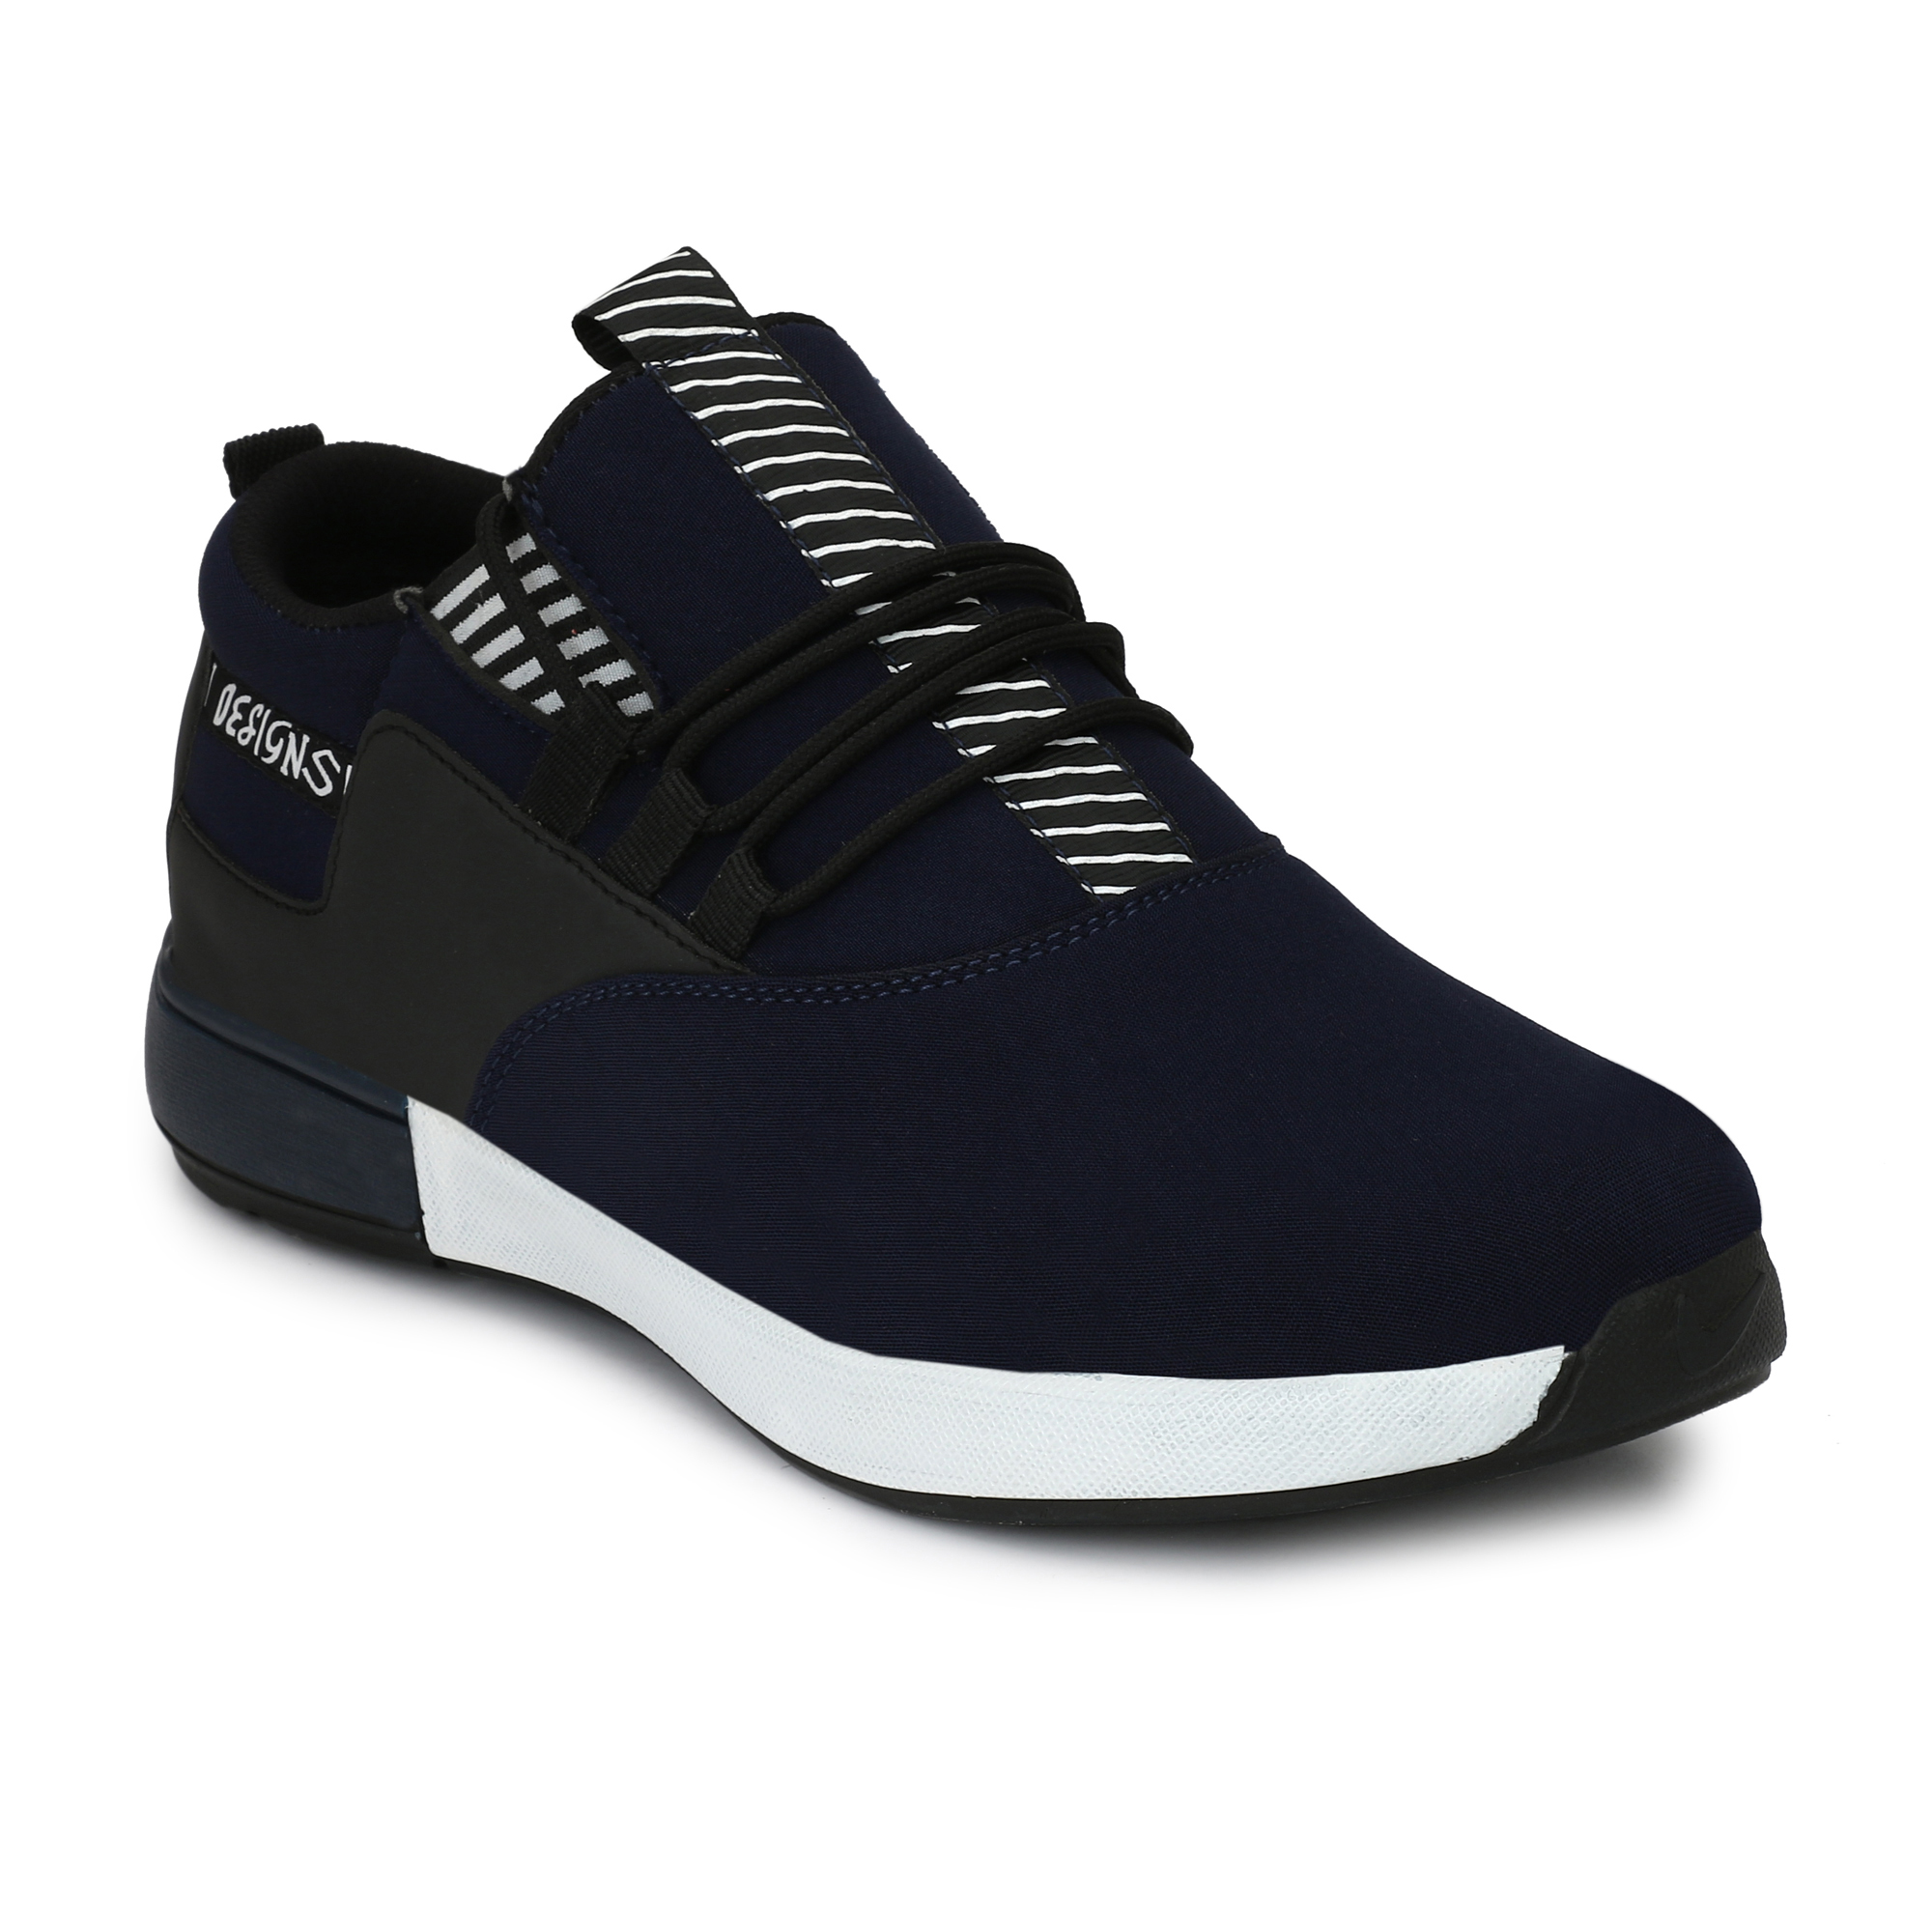 Buy Bradlan men's hao blue casual shoe Online @ ₹599 from ShopClues